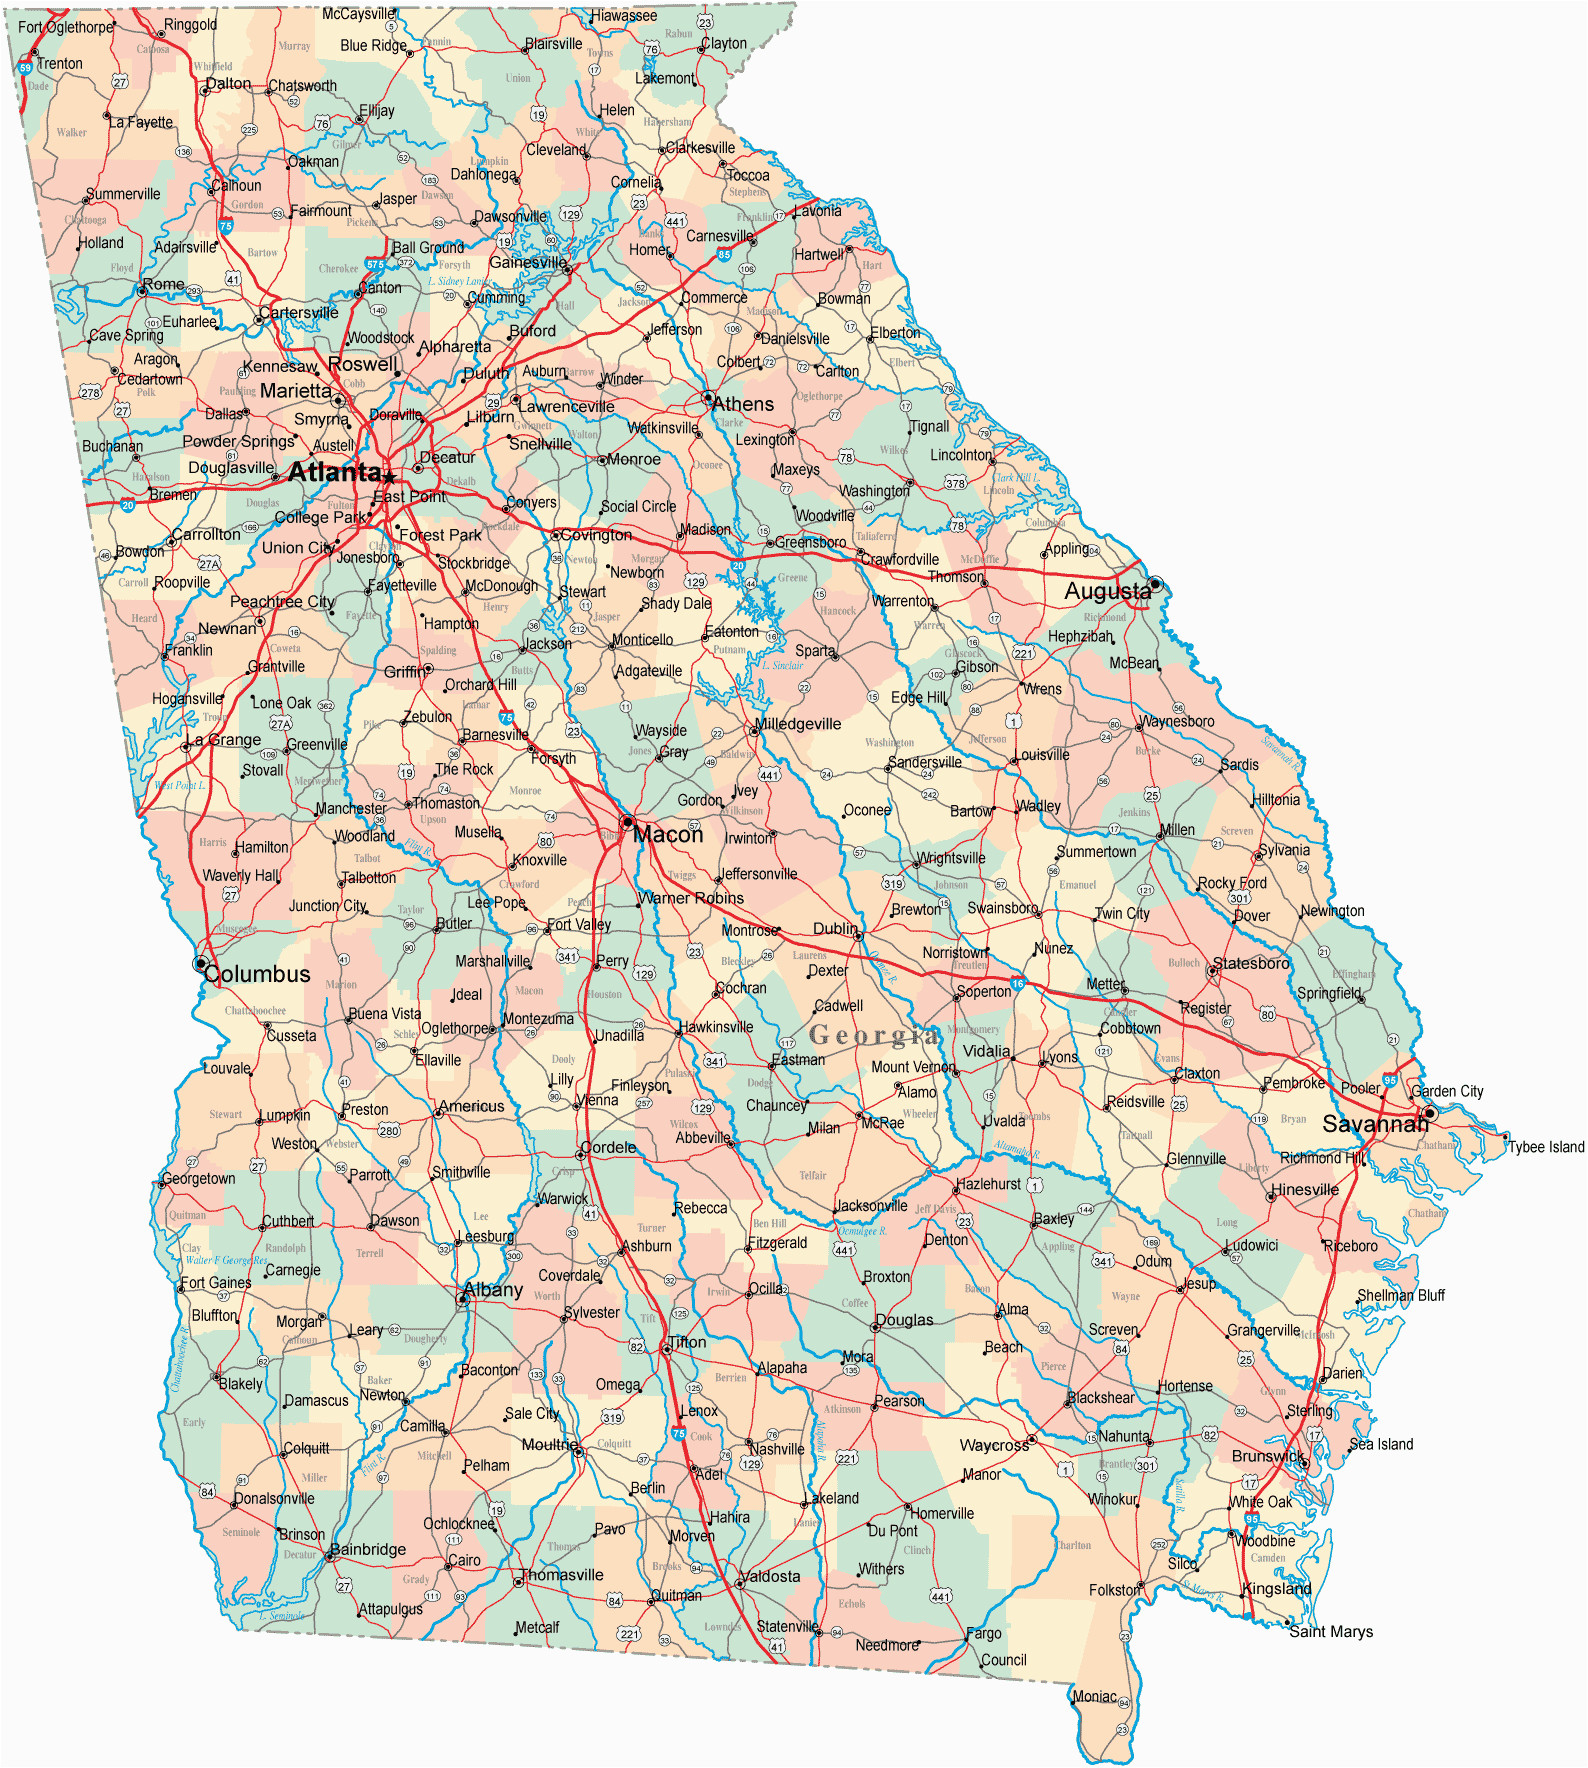 Georgia Road Maps Alabama Highway Map Luxury United States Map with Alabama Identified